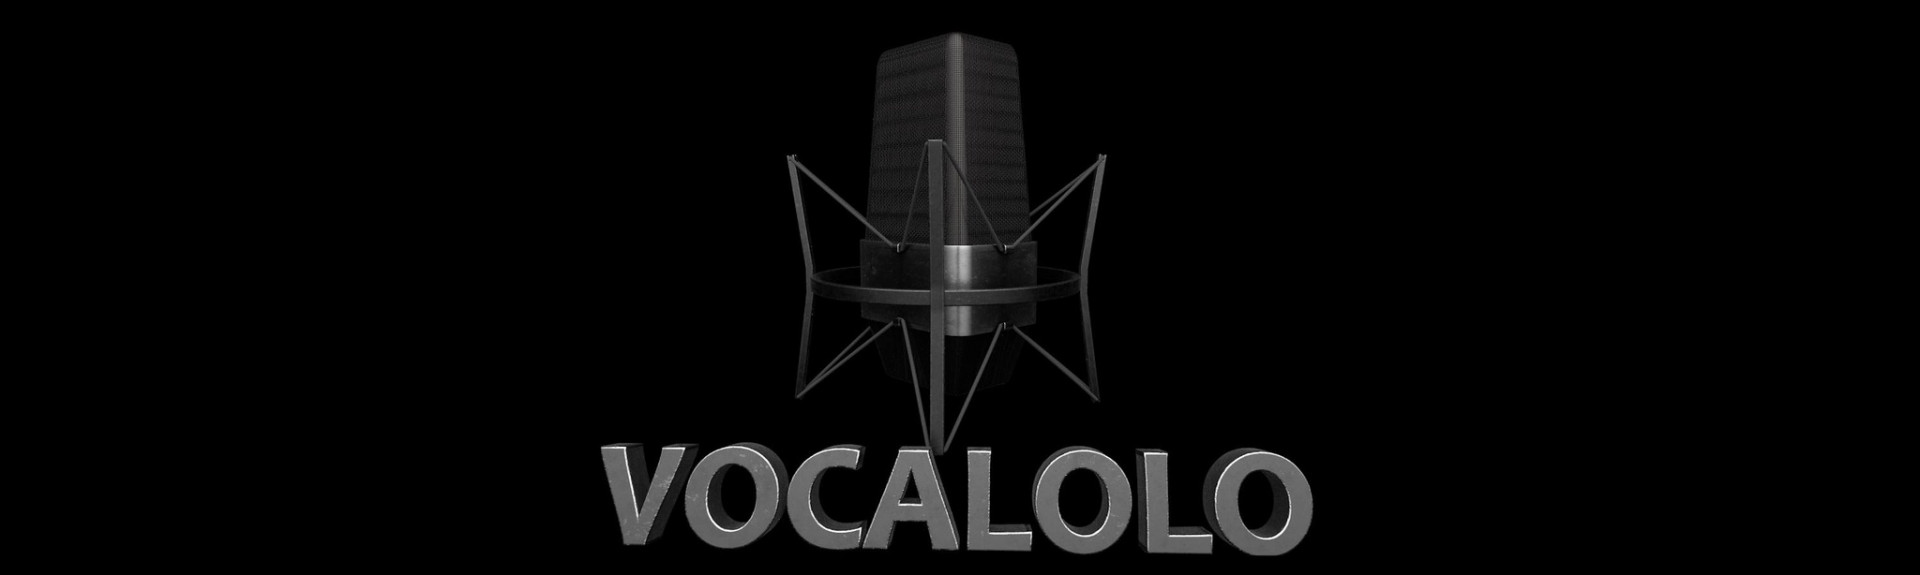 Vocalolo